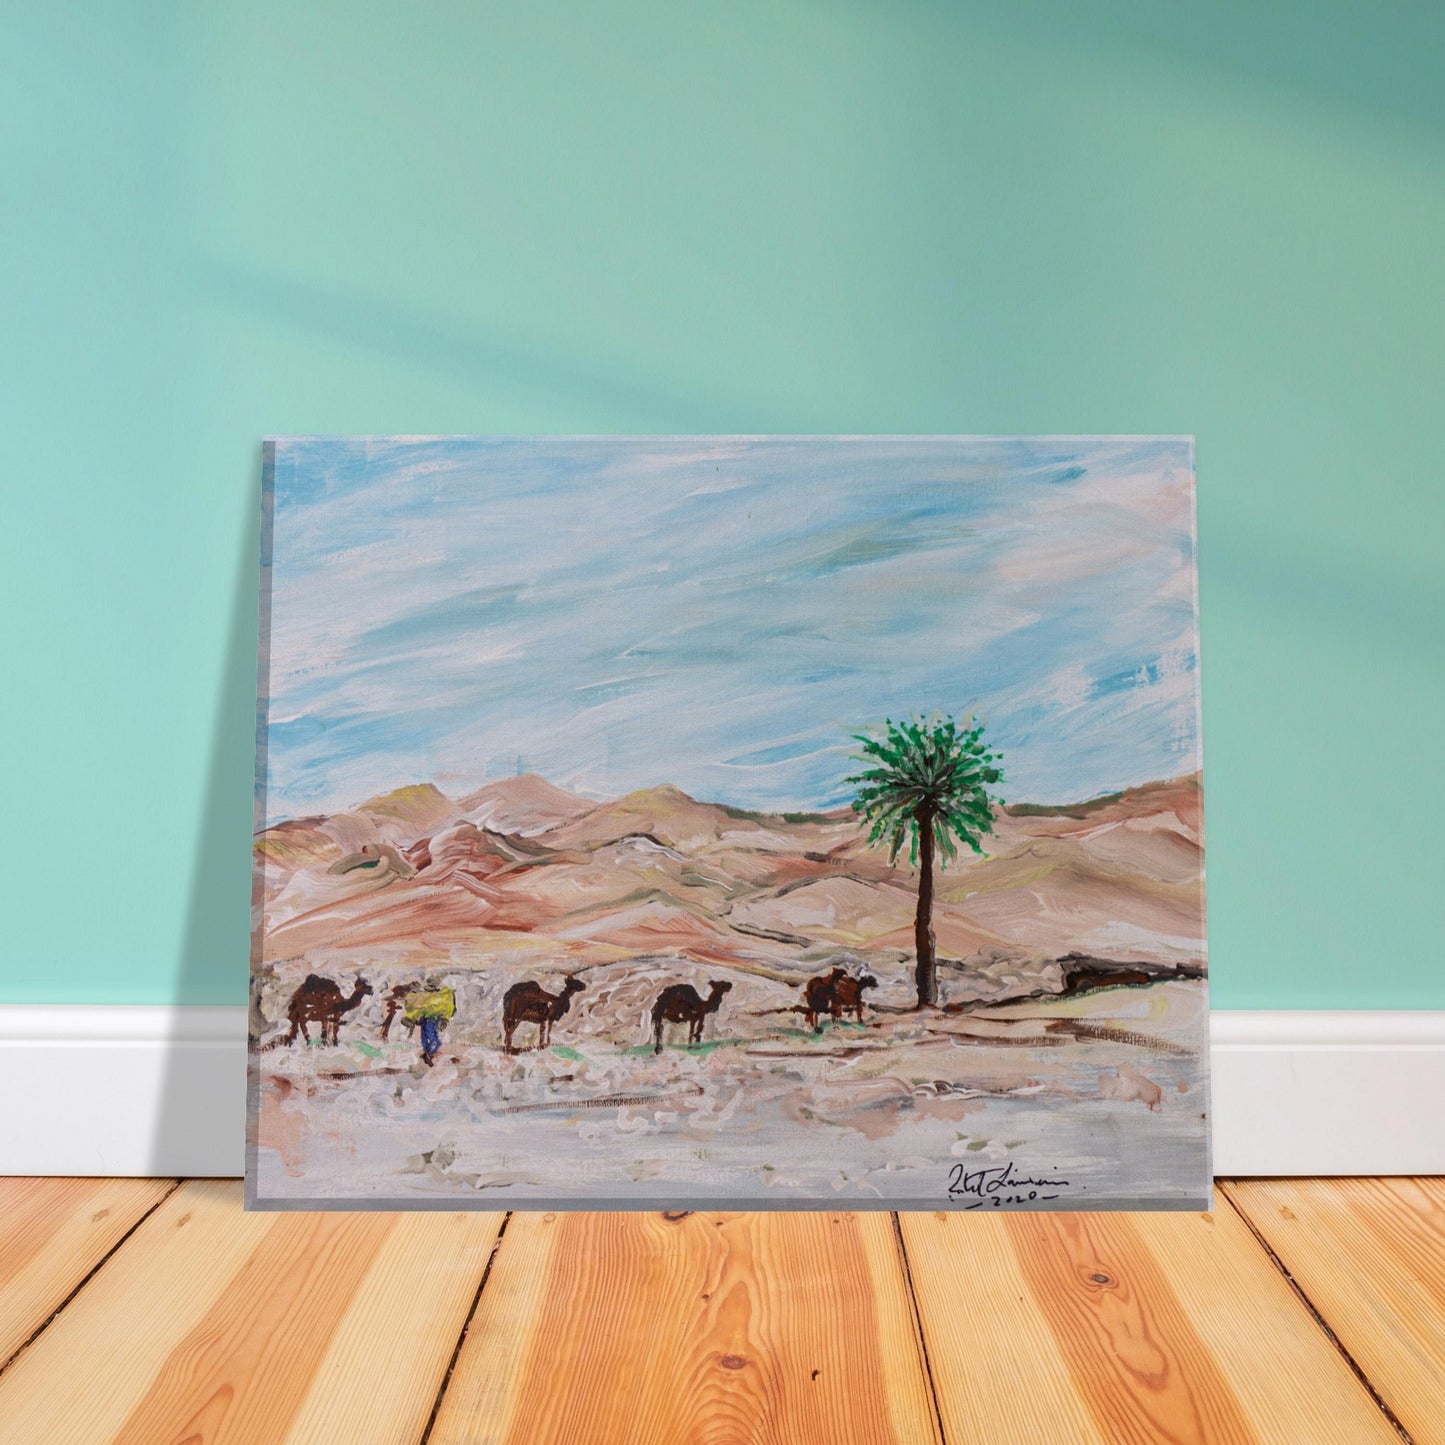 The Sahara Desert - Canvas